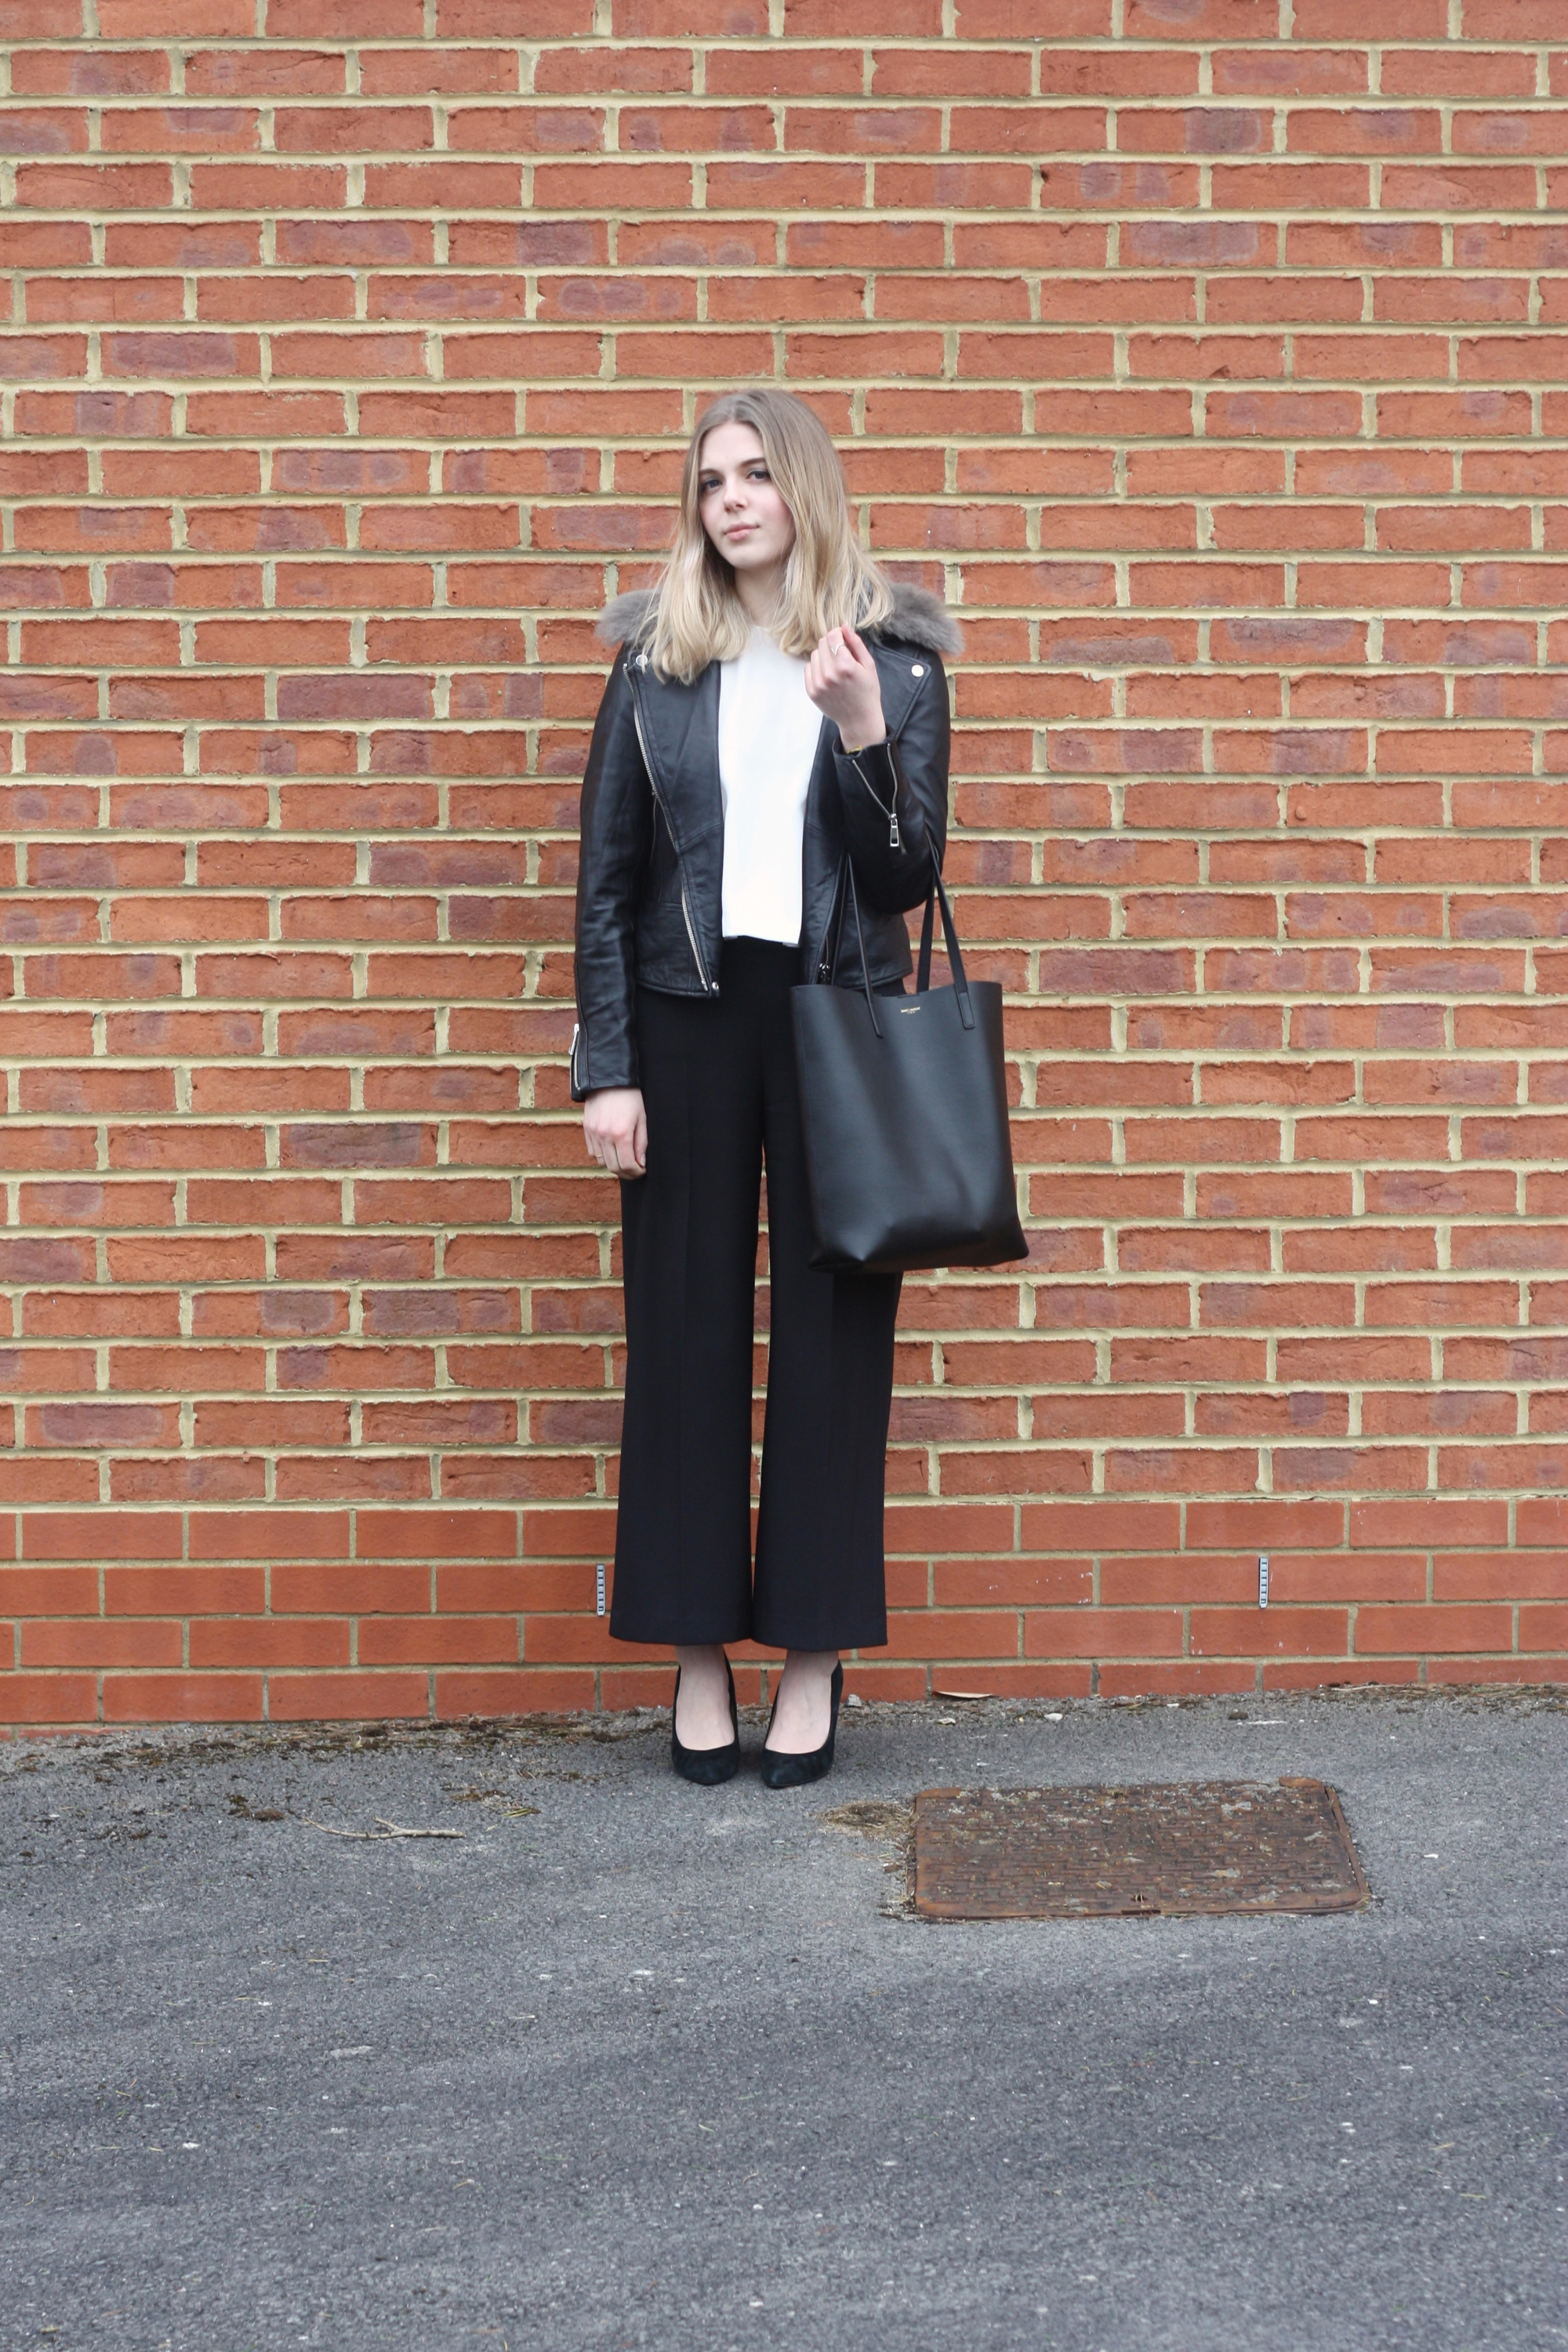 Saint Laurent shopper bag, Whistles black leather jacket and Whistles black suede heels